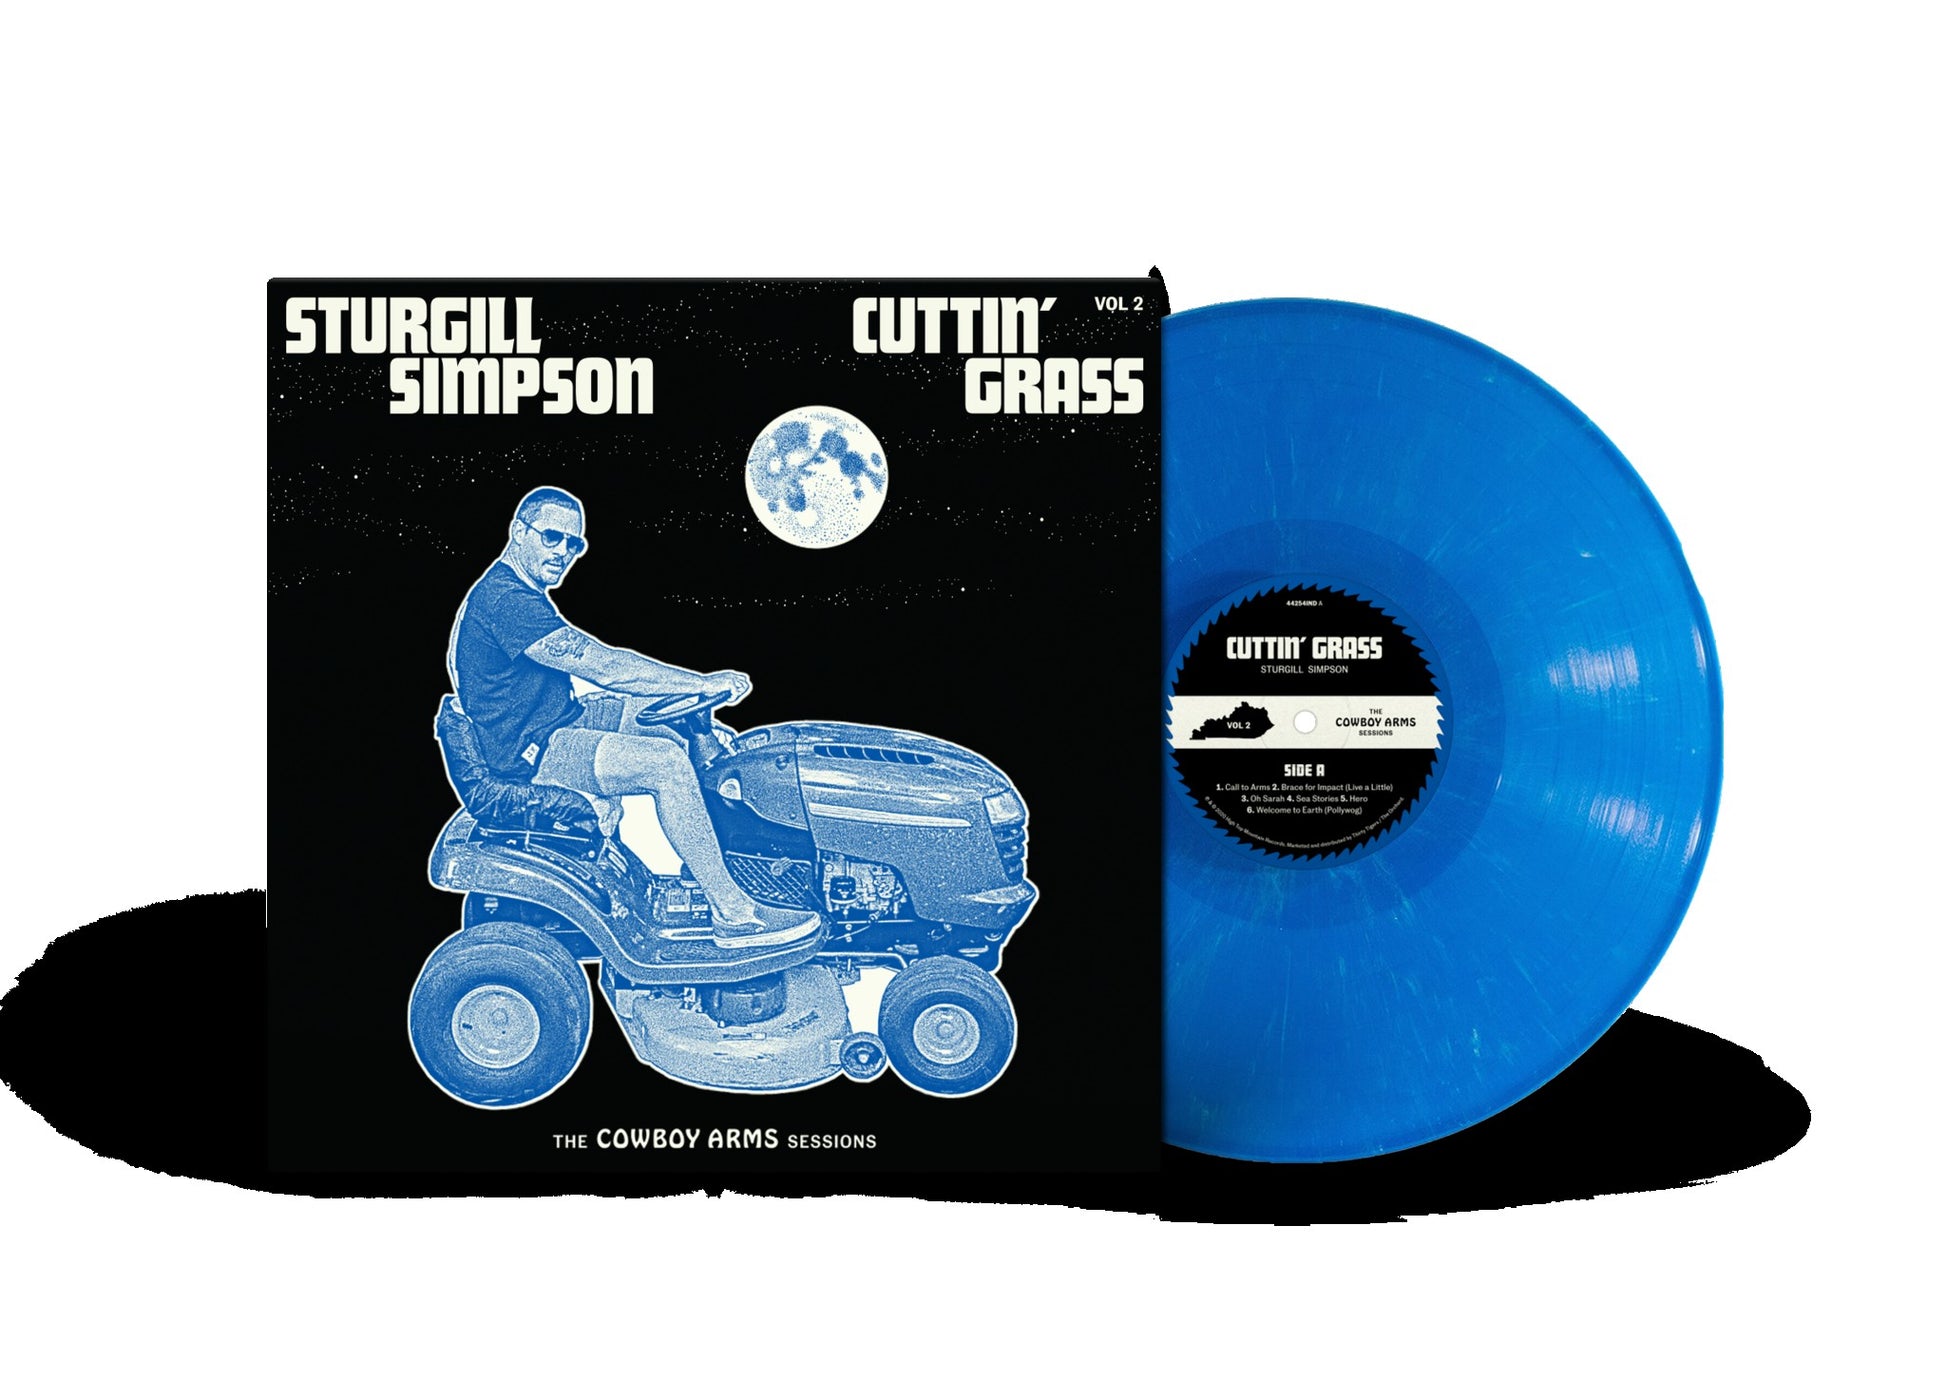 Sturgill Simpson - Cuttin' Grass Vol. 2 (Cowboy Arms Sessions) [Blue w/White Swirl Vinyl LP] [Indie Exclusive]